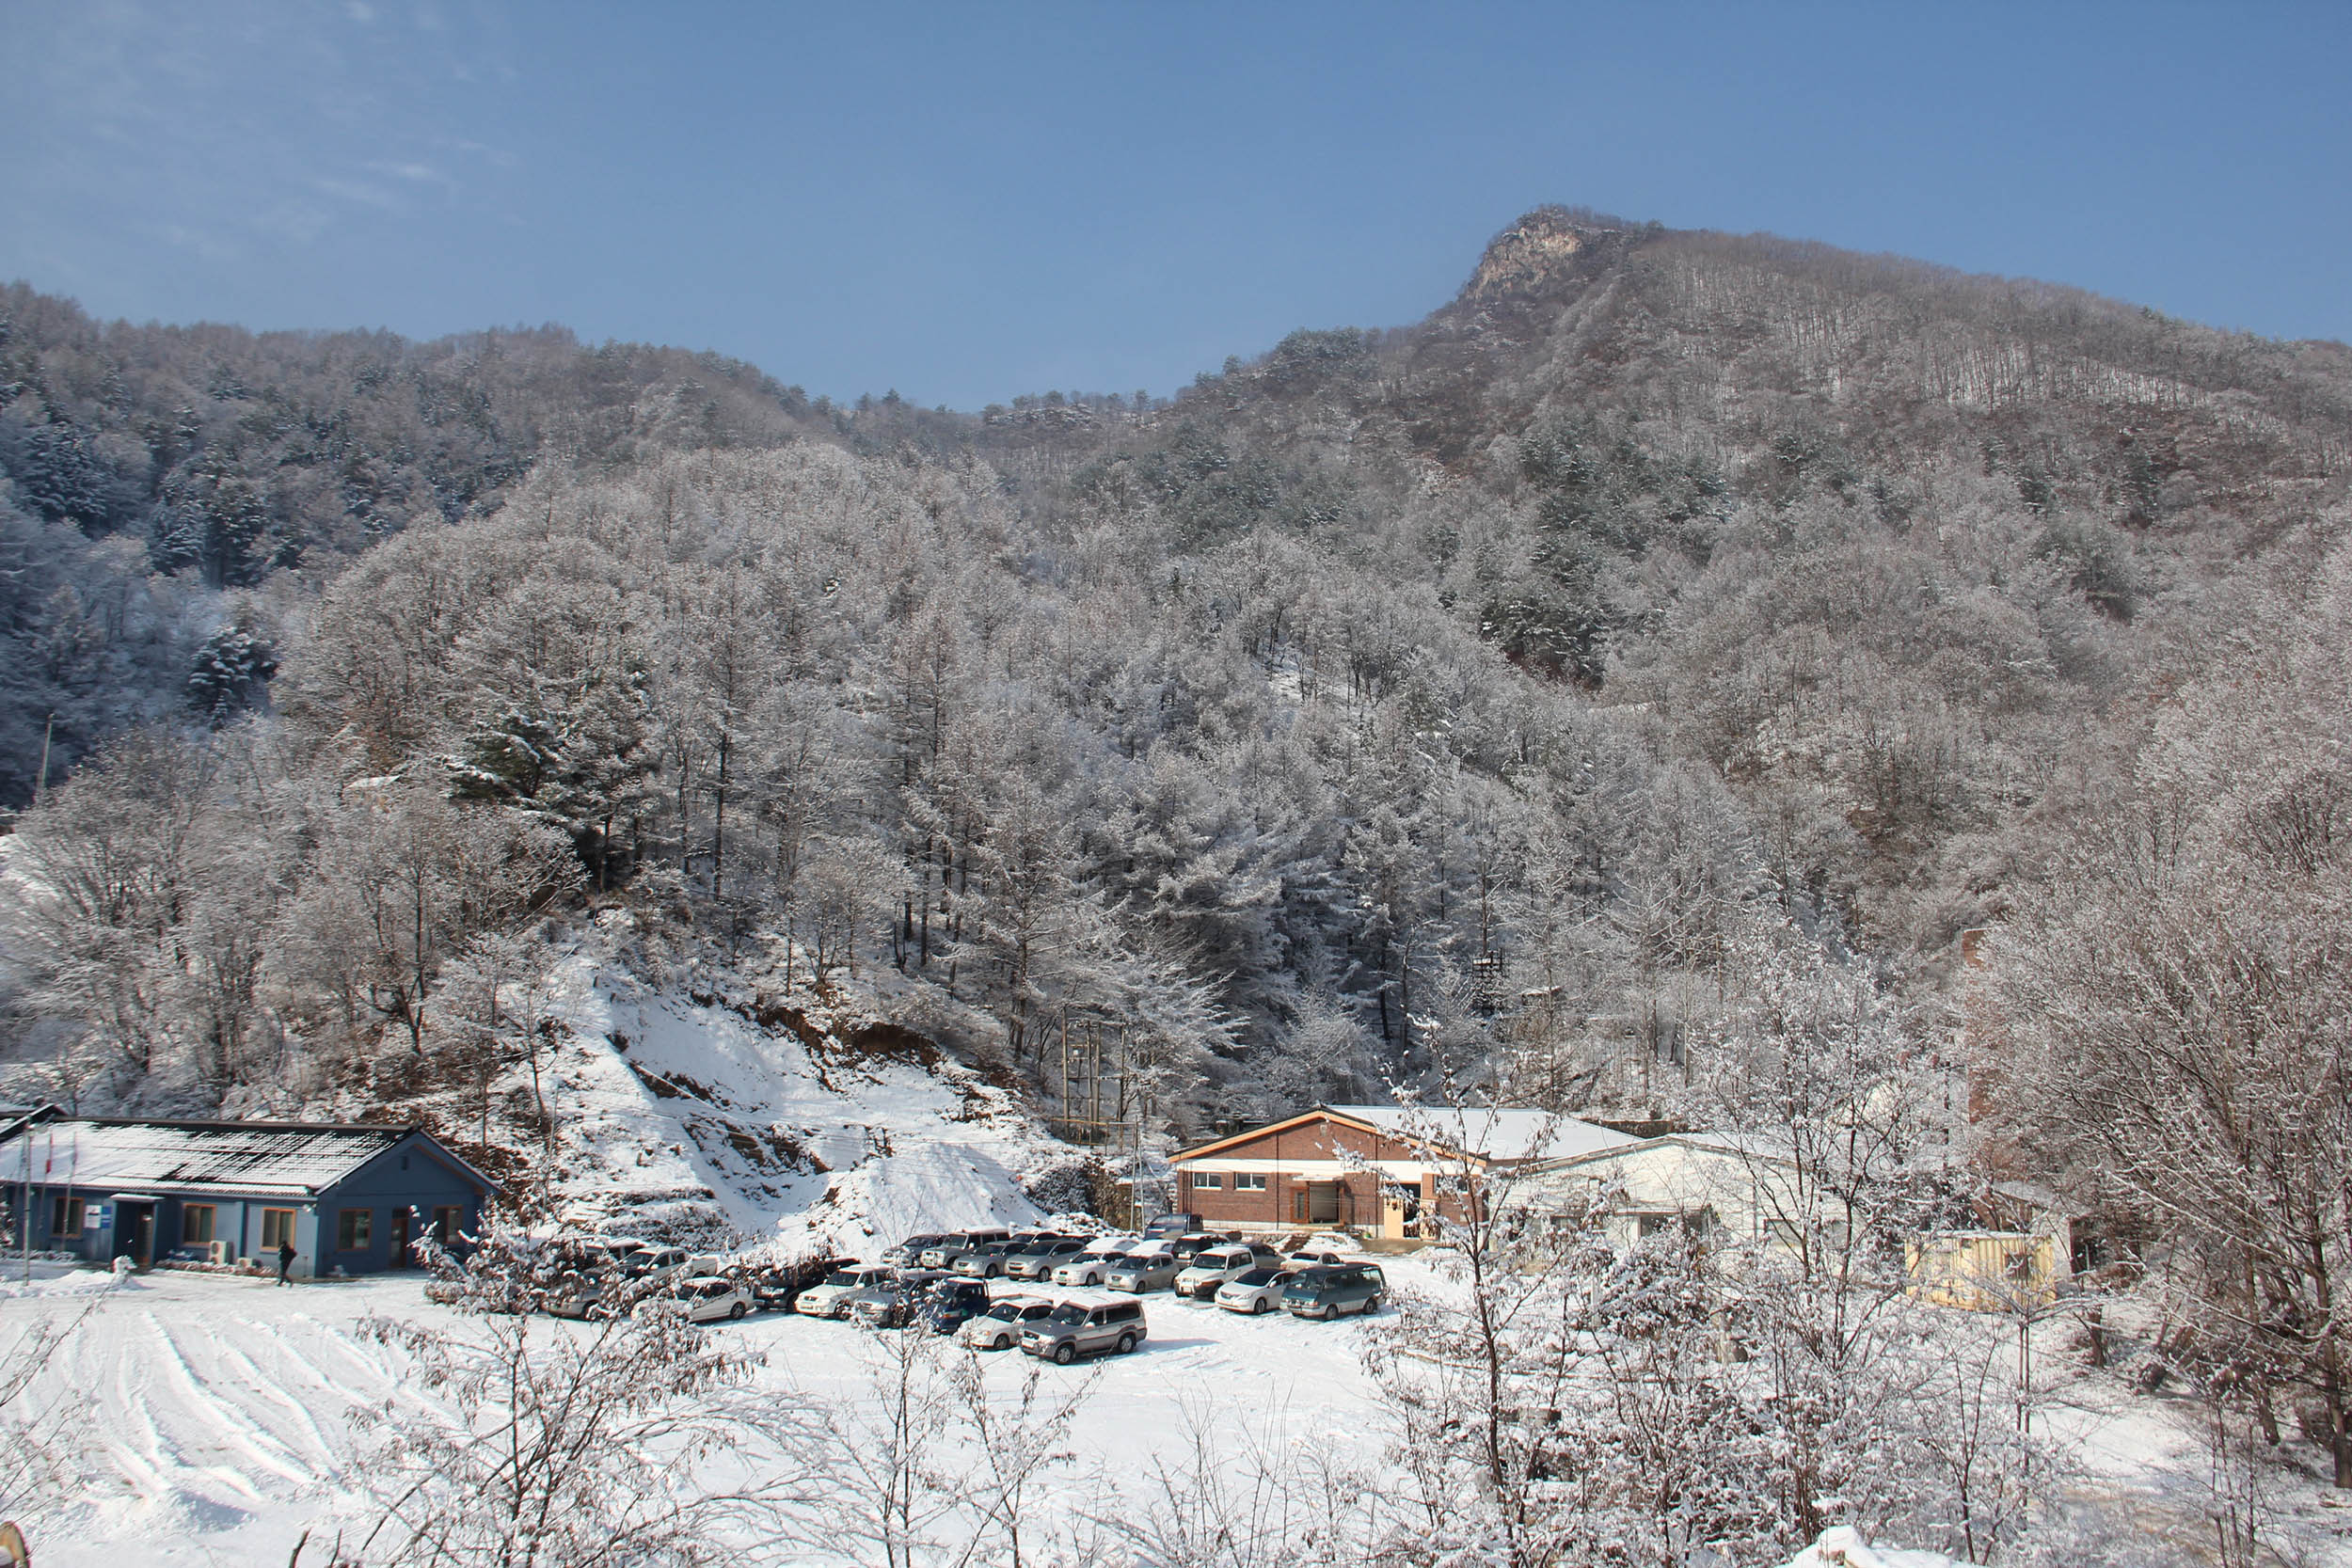 Sangdong Mine and AKTC(Almonty Korea Tungsten Corporation) Main Office